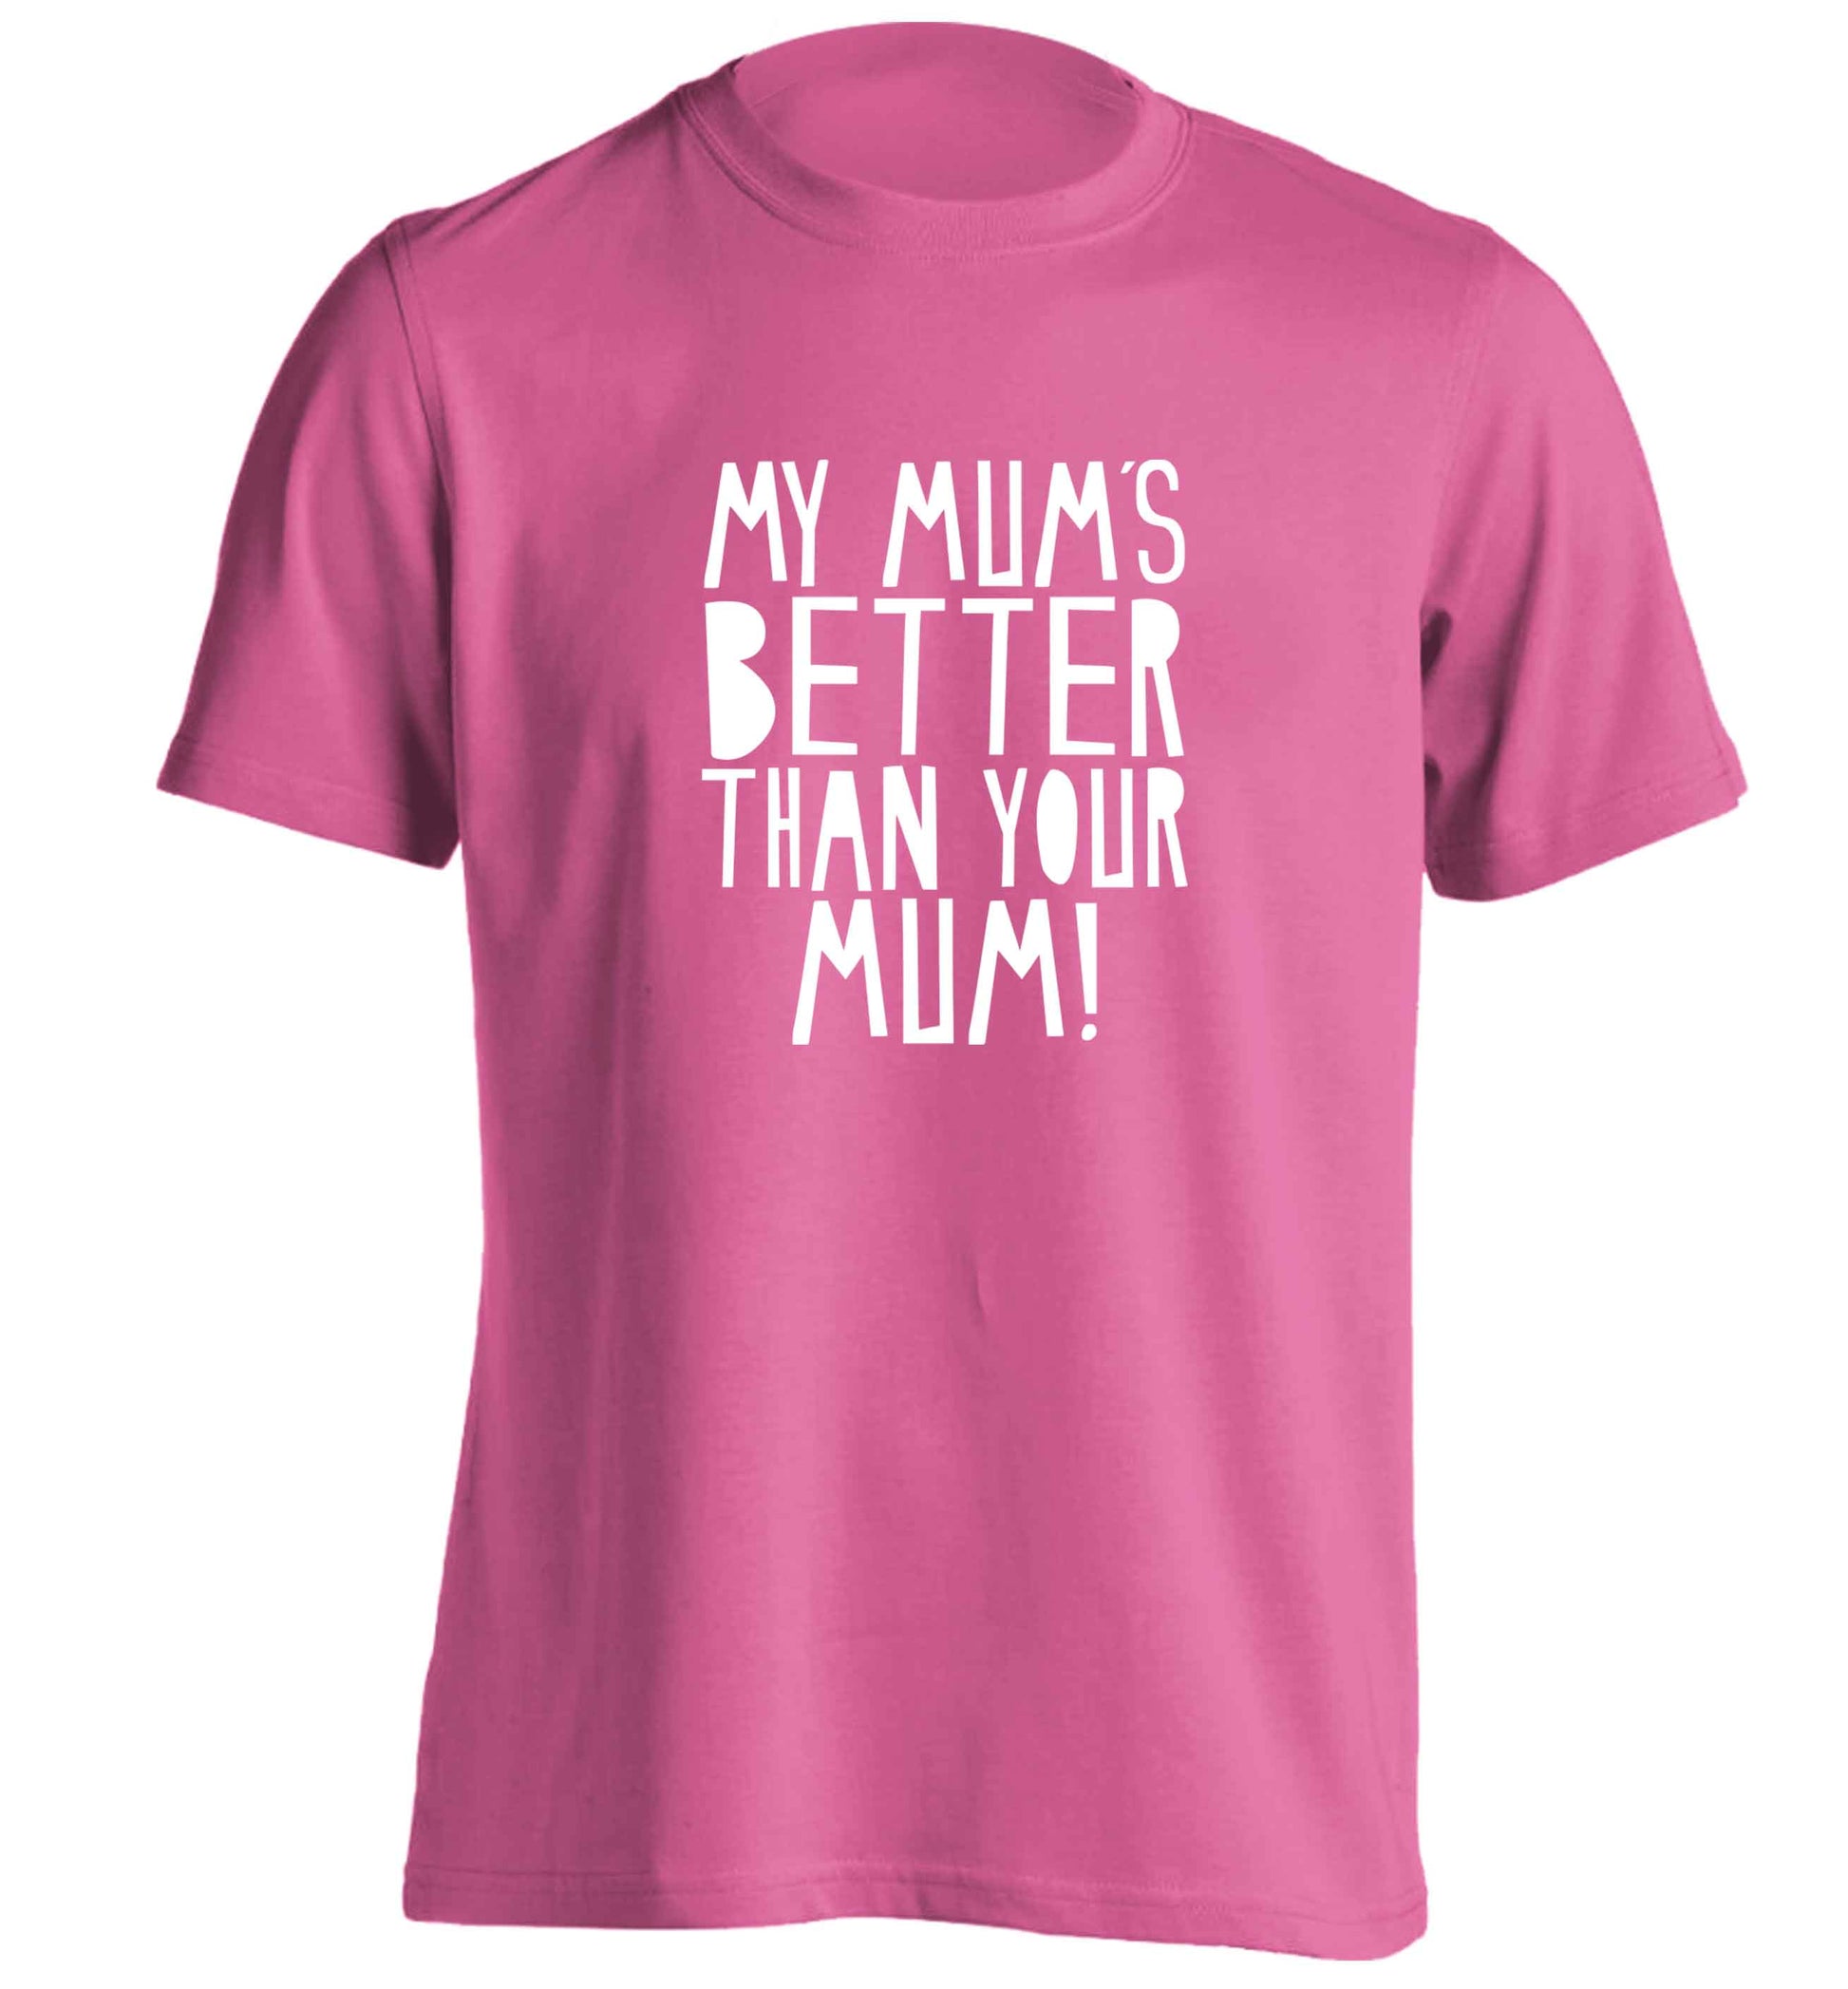 My mum's better than your mum adults unisex pink Tshirt 2XL